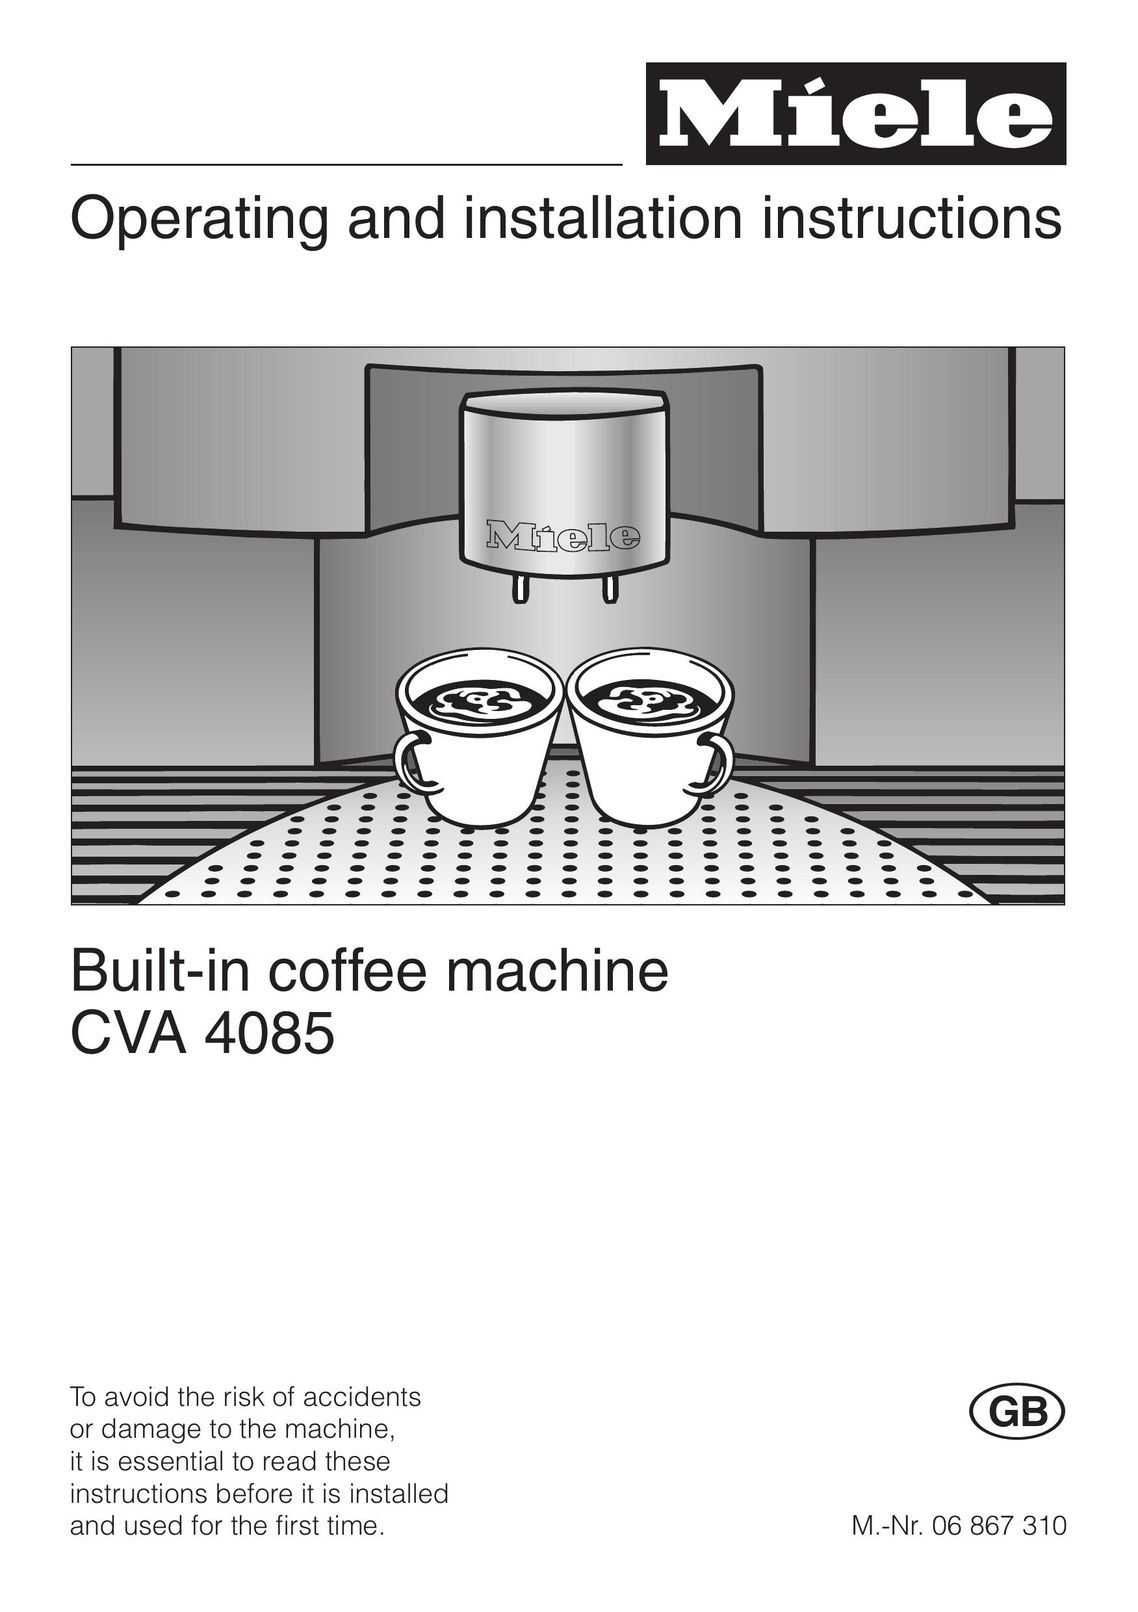 Miele CVA 4085 Coffeemaker User Manual